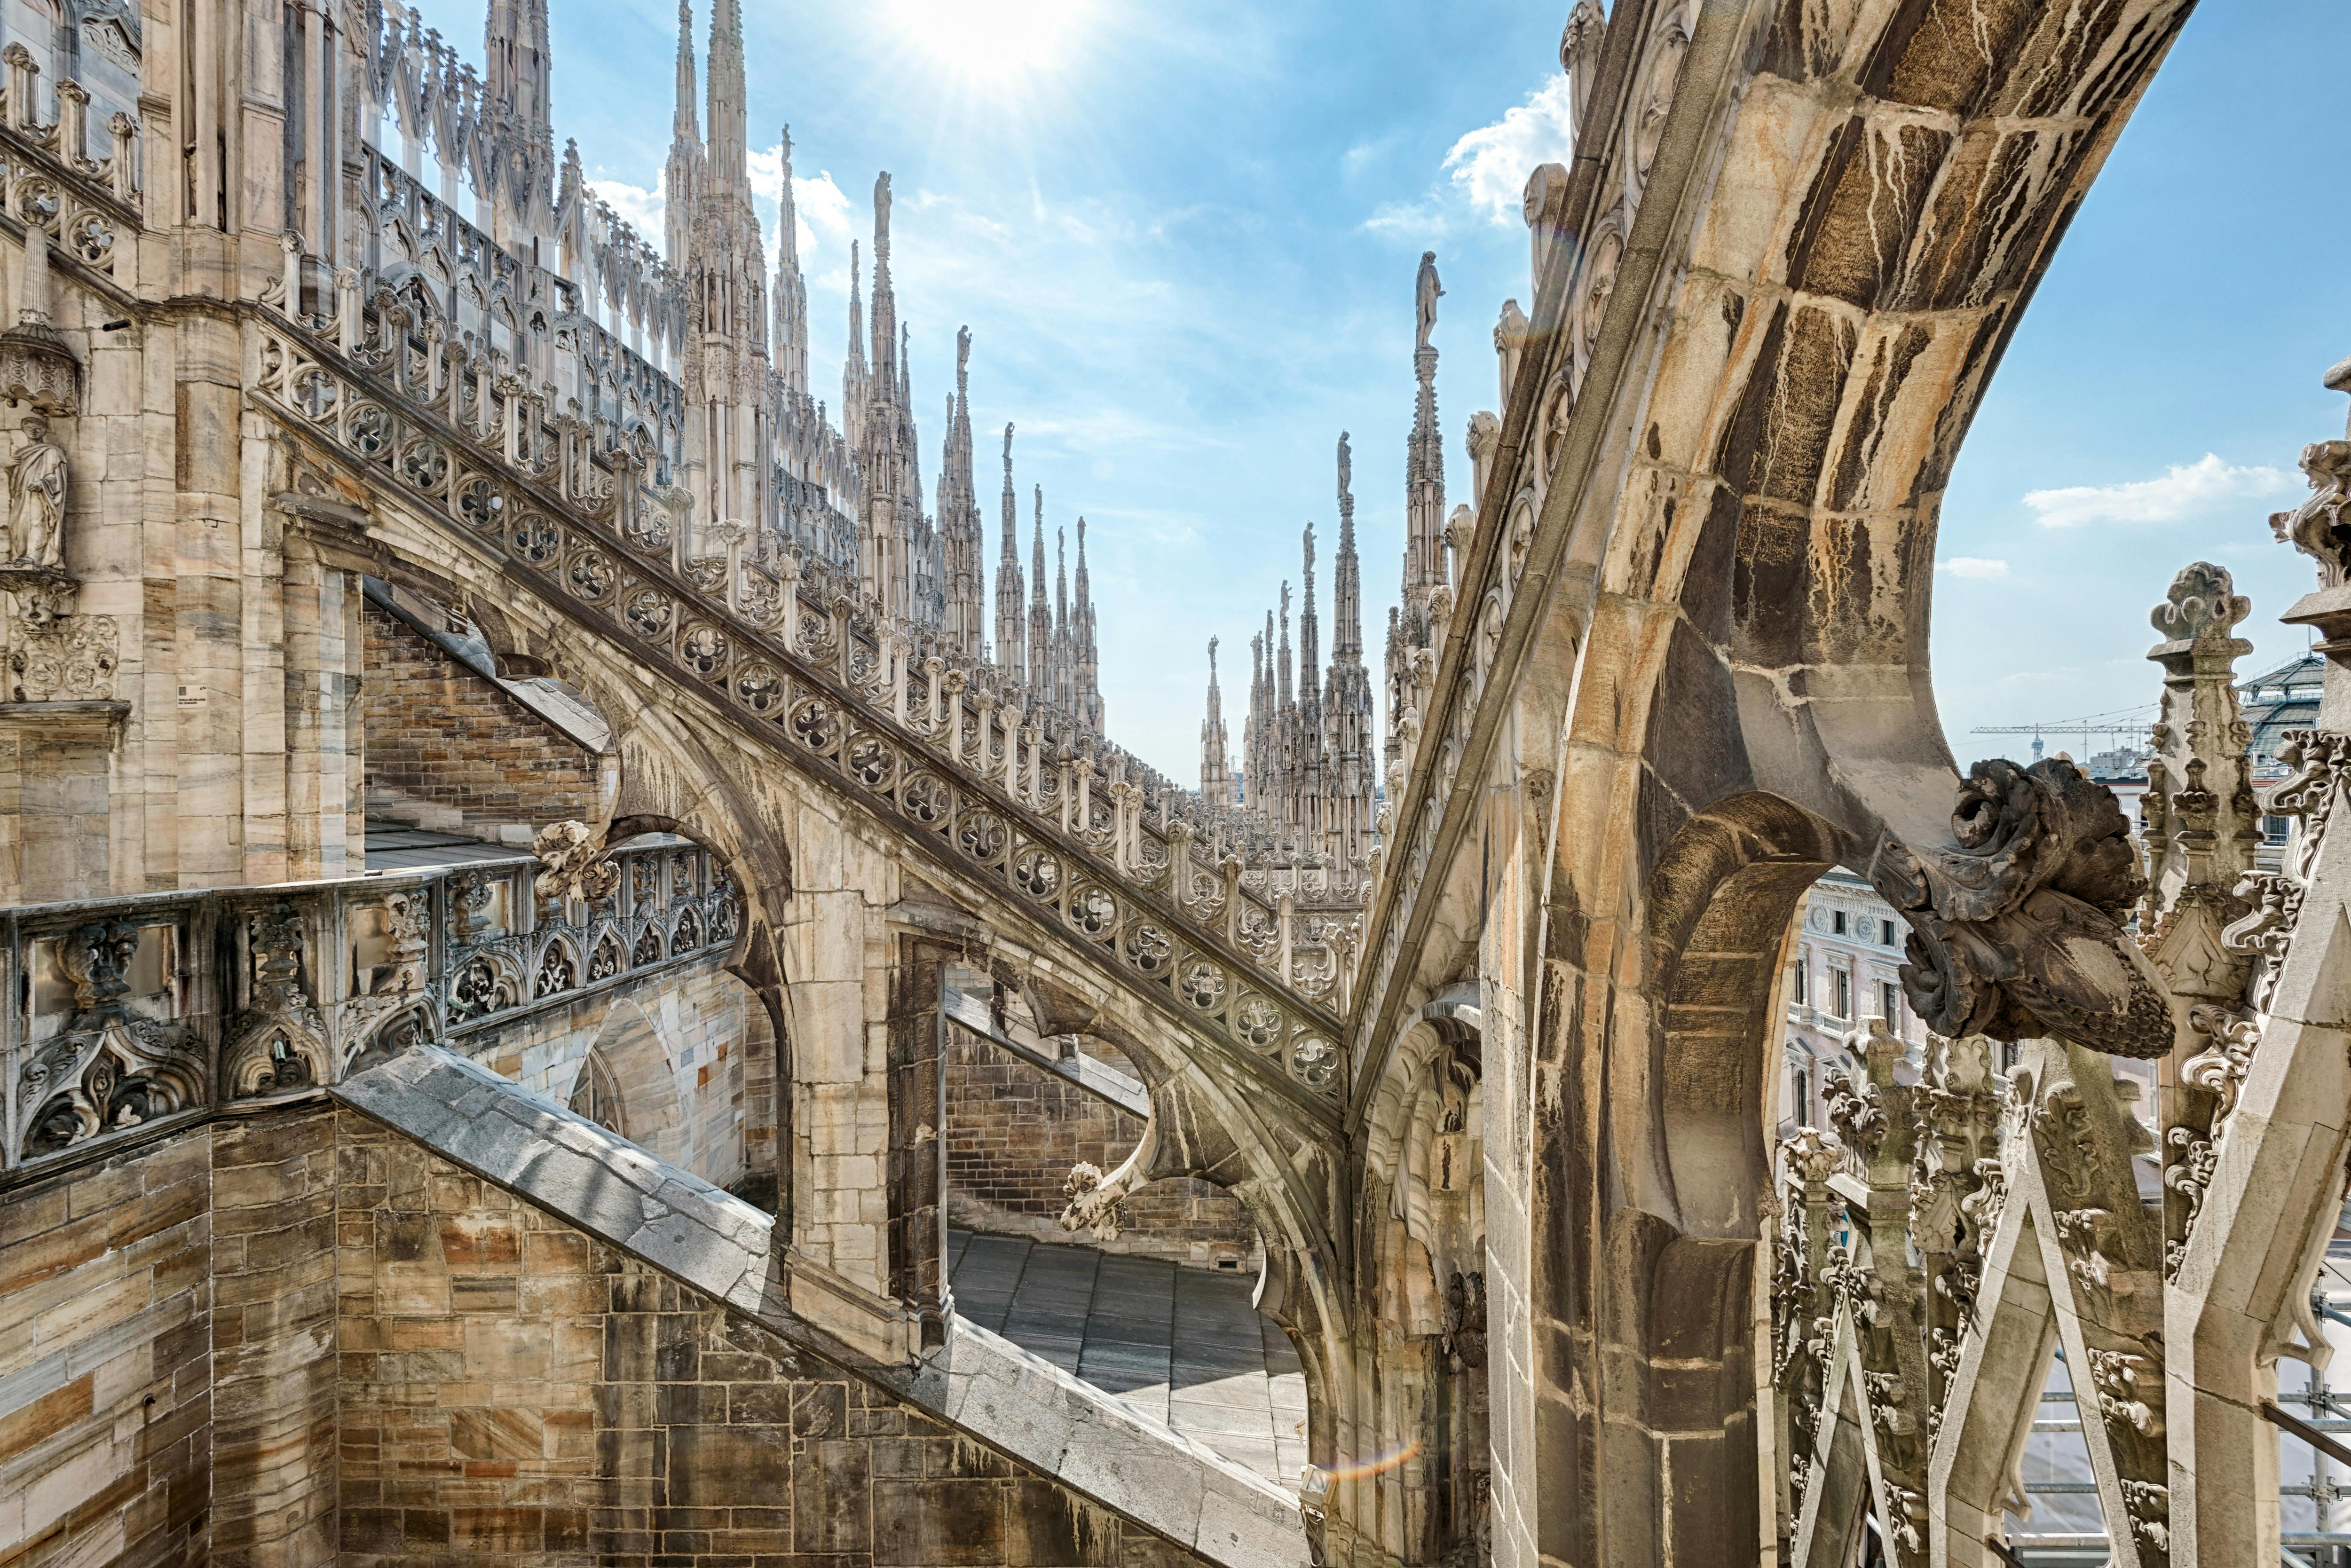 Skip-the-line Milan's Duomo rooftop tour